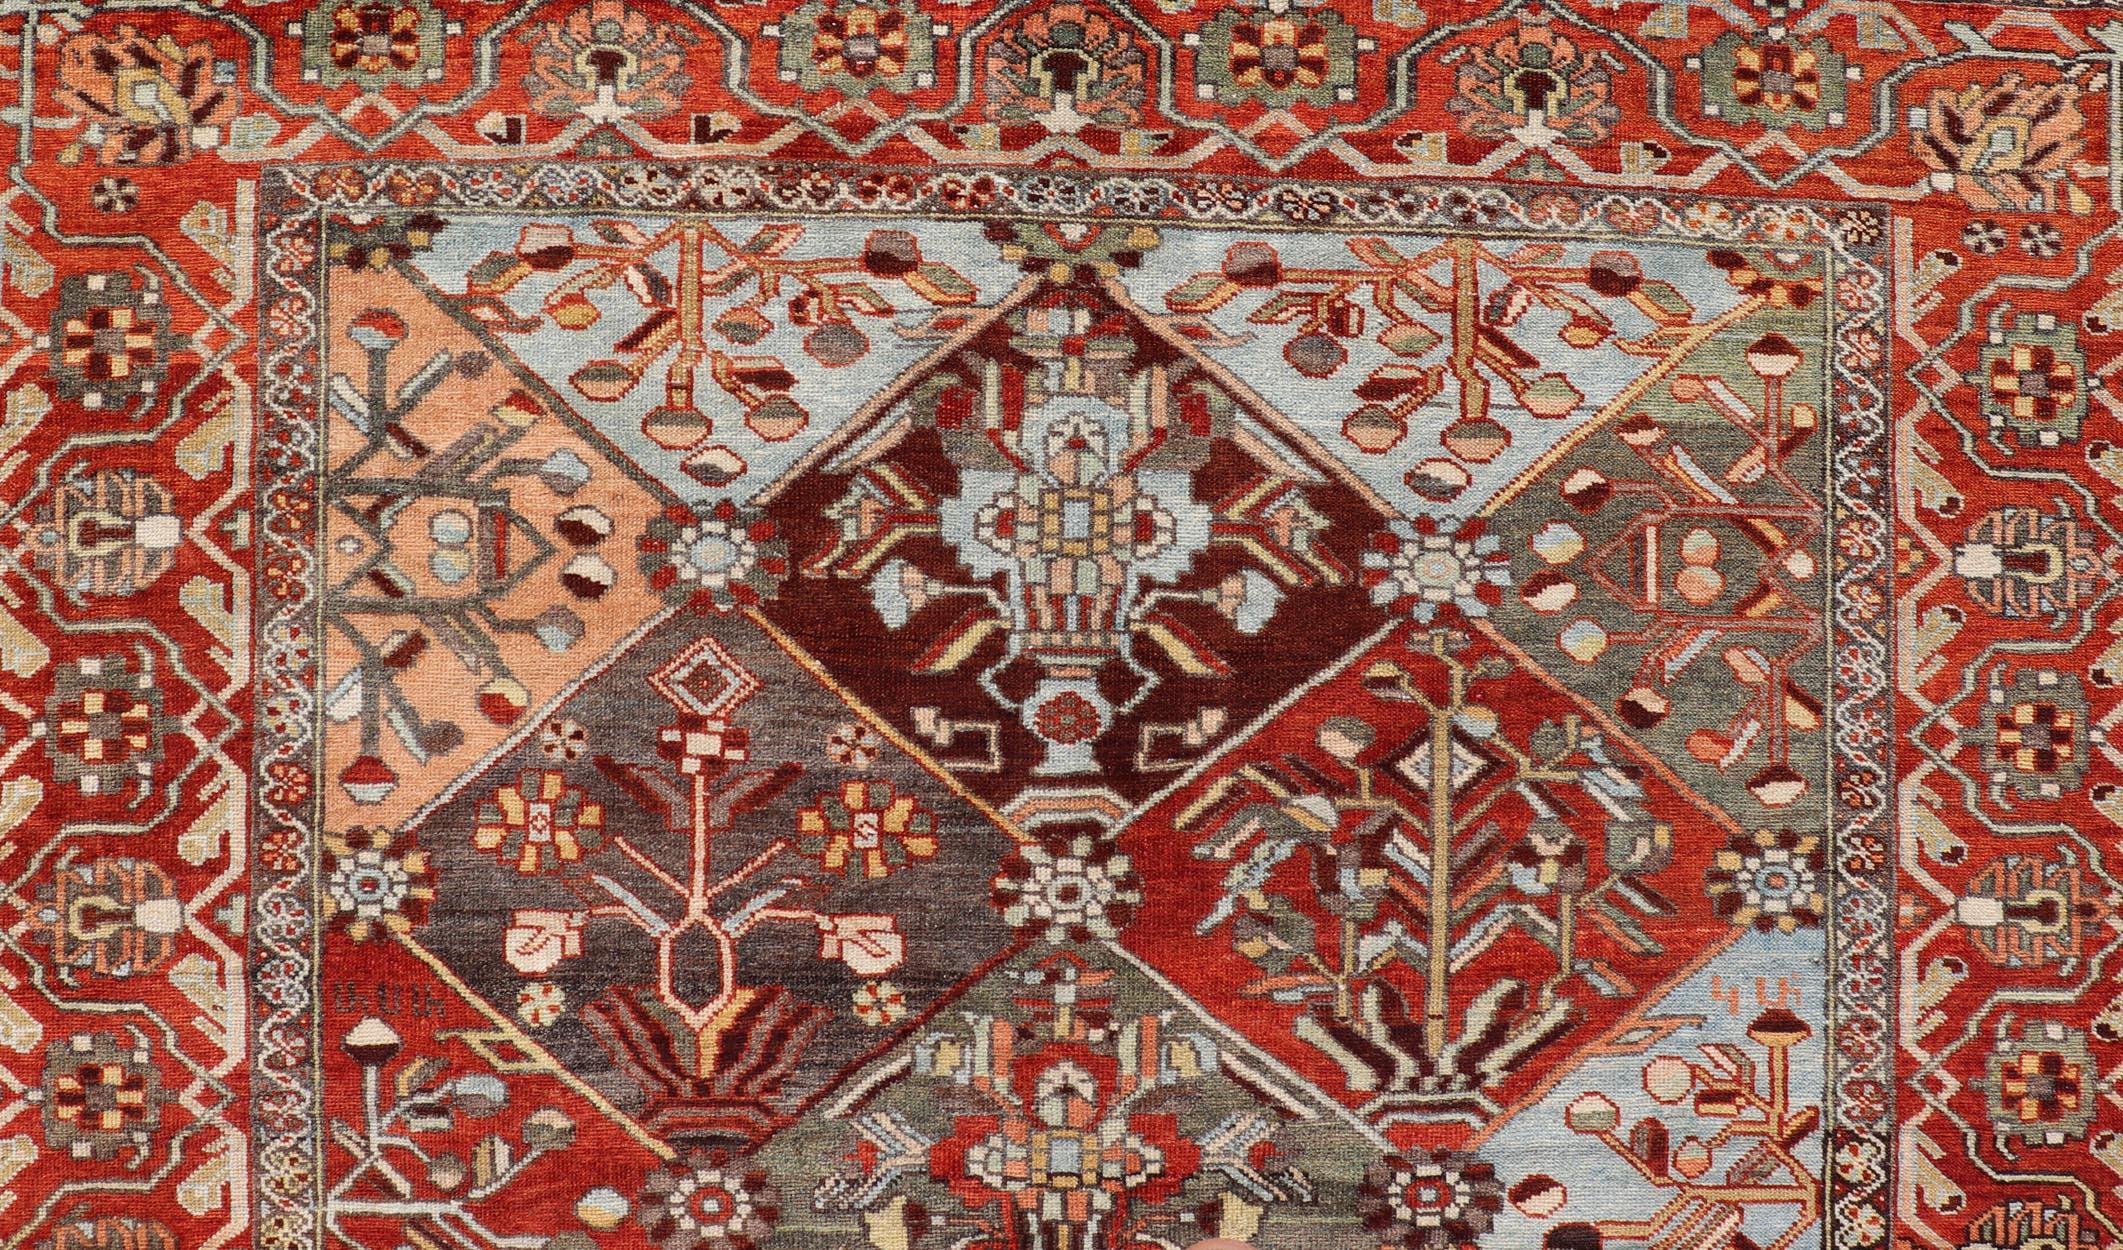 Antique Persian Bakhitari Colorful Rug in All-Over Diamond Garden Design  For Sale 3